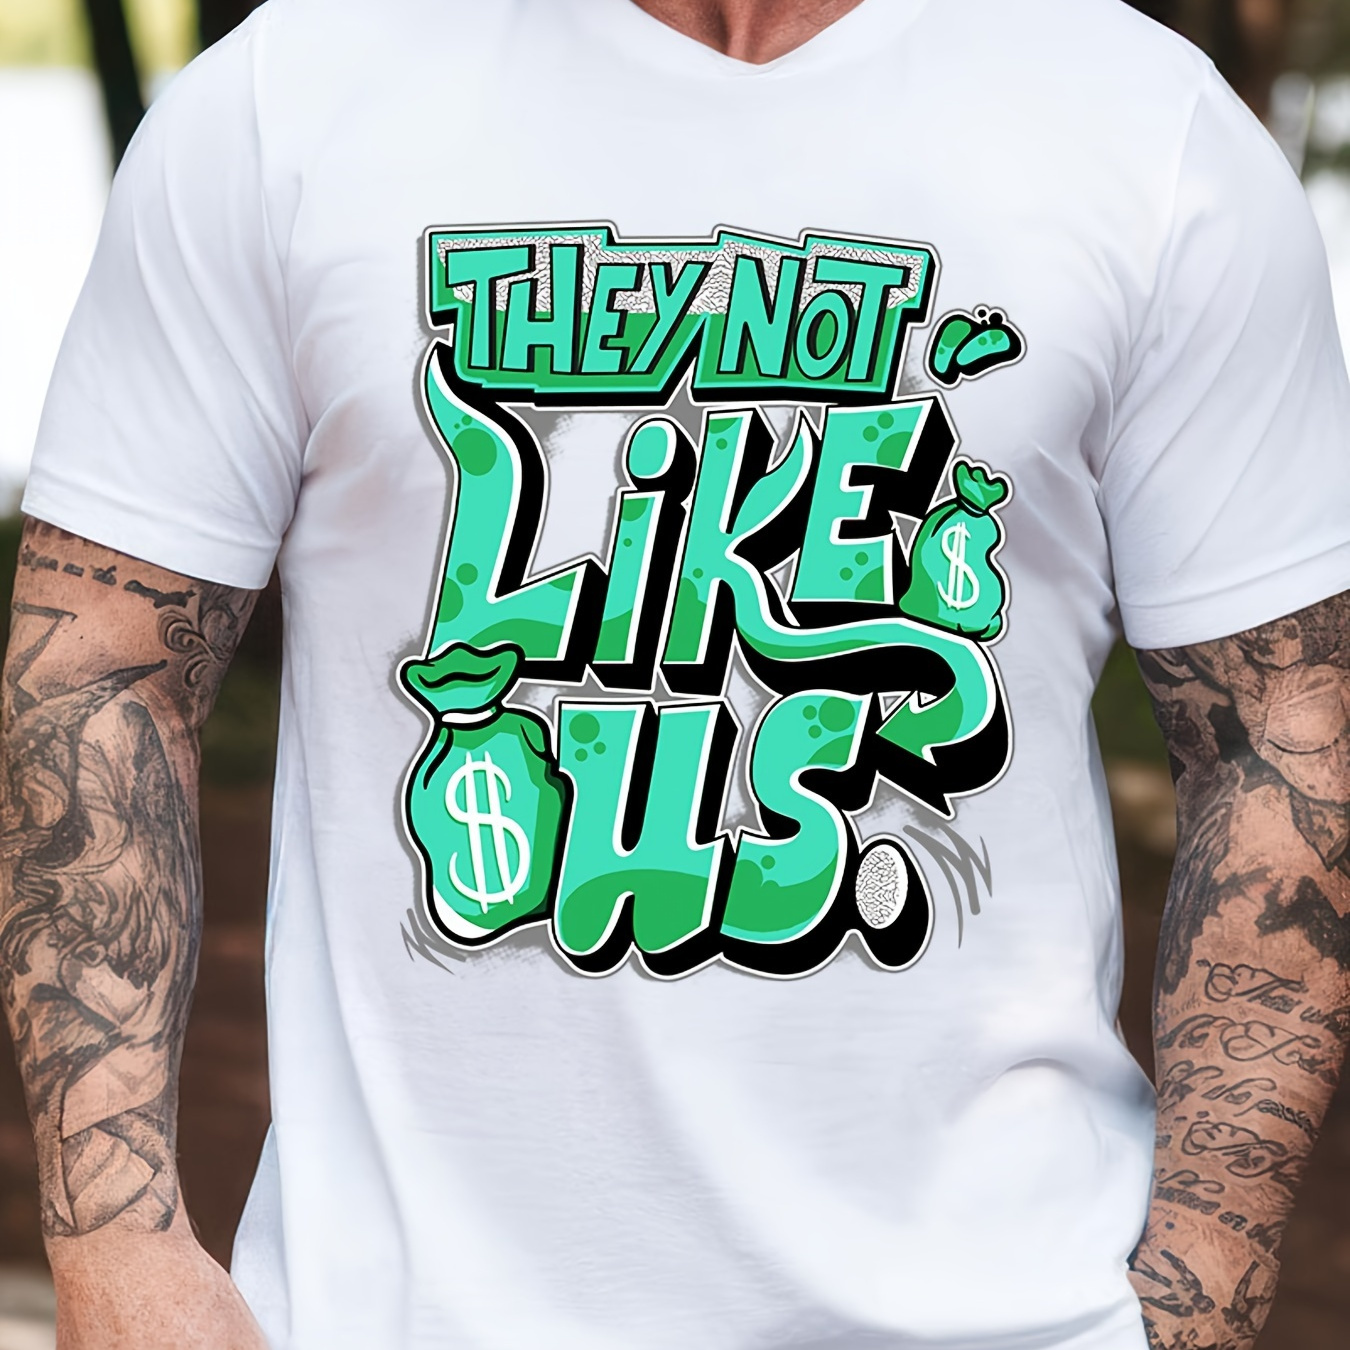 

Dunkare Black Green Glow 3s T-shirt Graphic Print Tee Shirt, Men's Casual Short Sleeve T-shirt